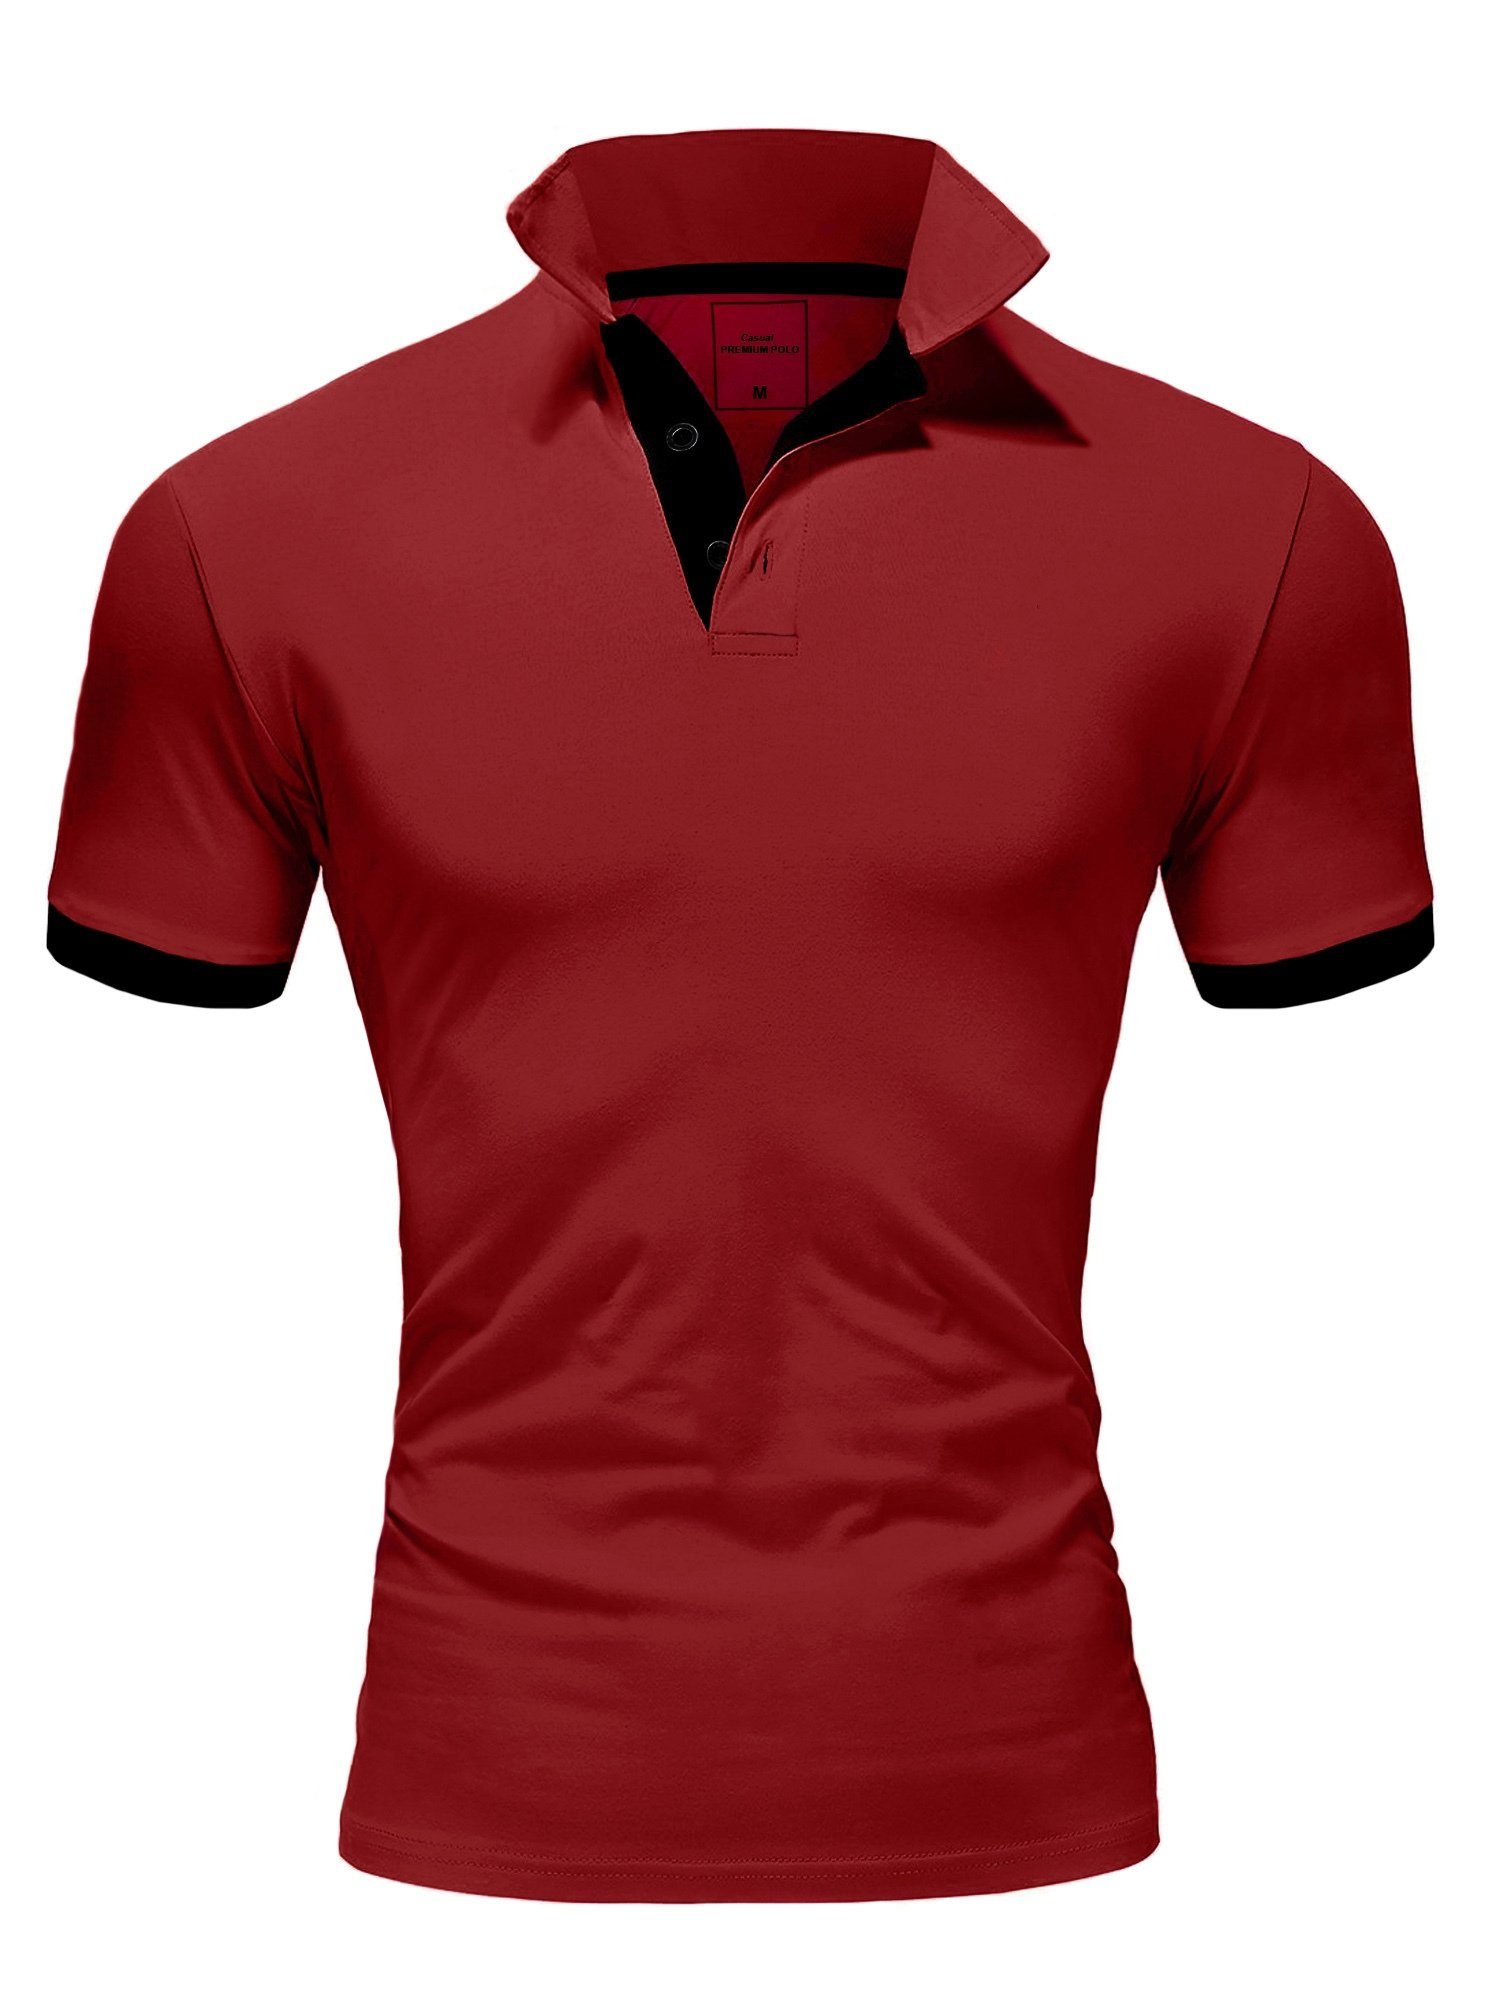 Poloshirt Shirt REPUBLIX RONALD Bordeaux/Schwarz Herren Qualität in kontrastierenden mit Piqué Akzenten,